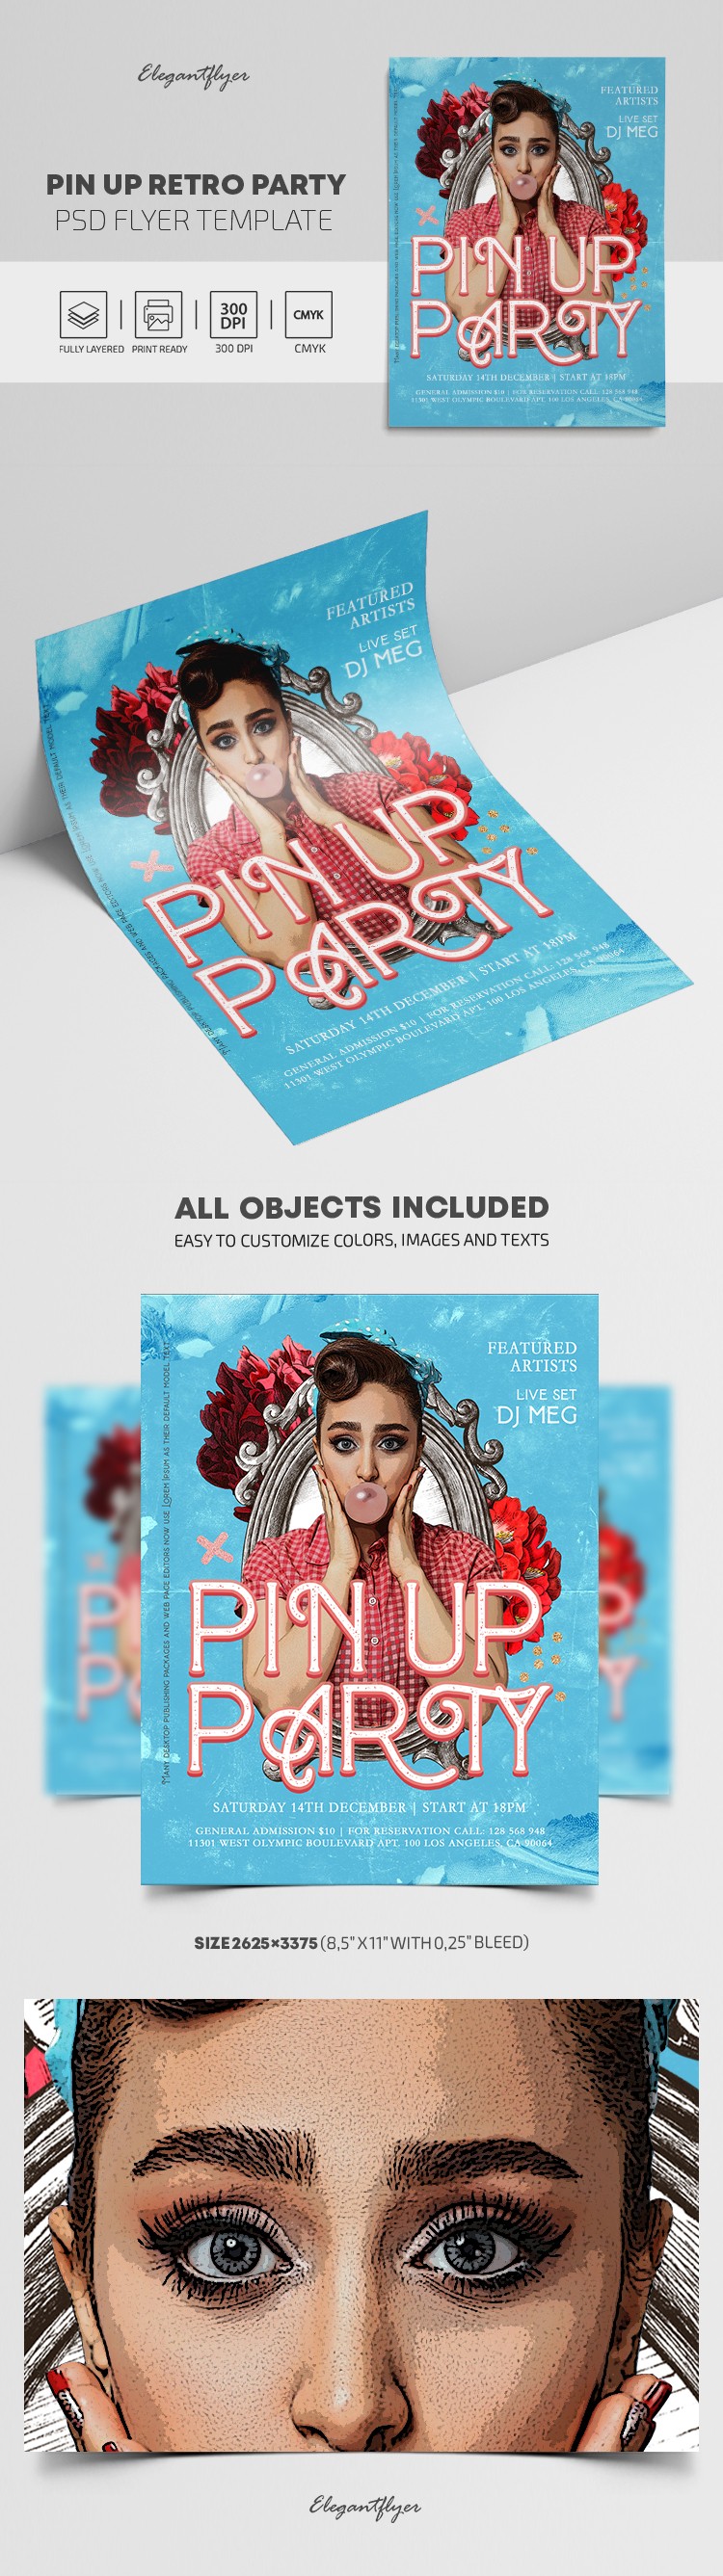 Pin Up Retro Party Flyer by ElegantFlyer